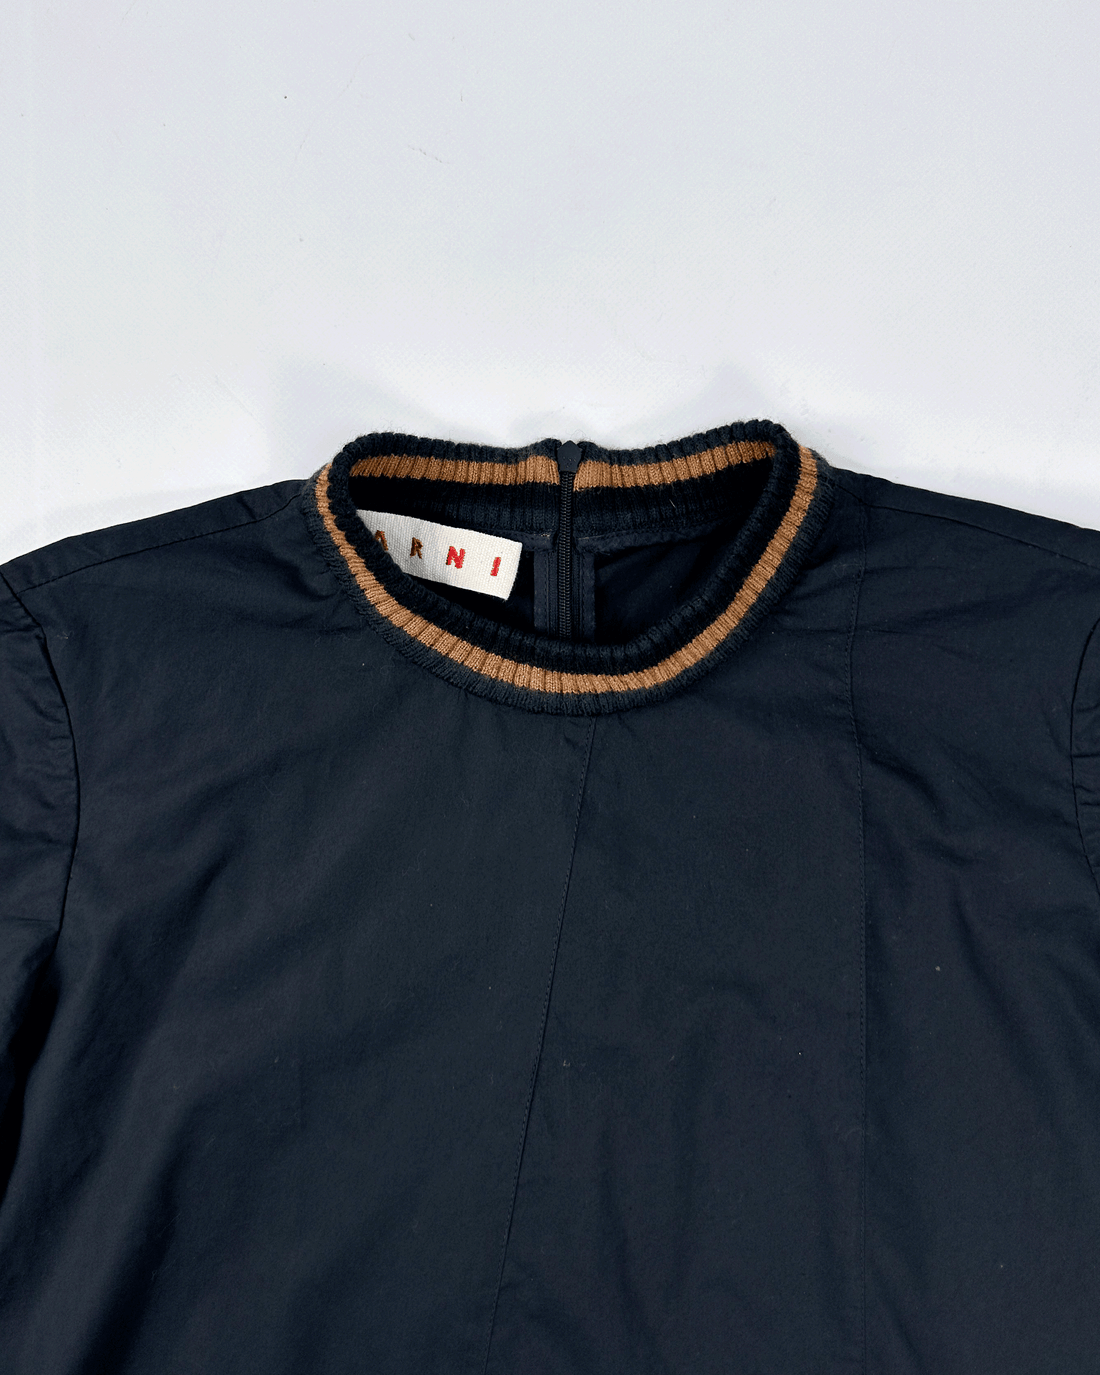 Marni Pleated Black Zipped Top 1990's